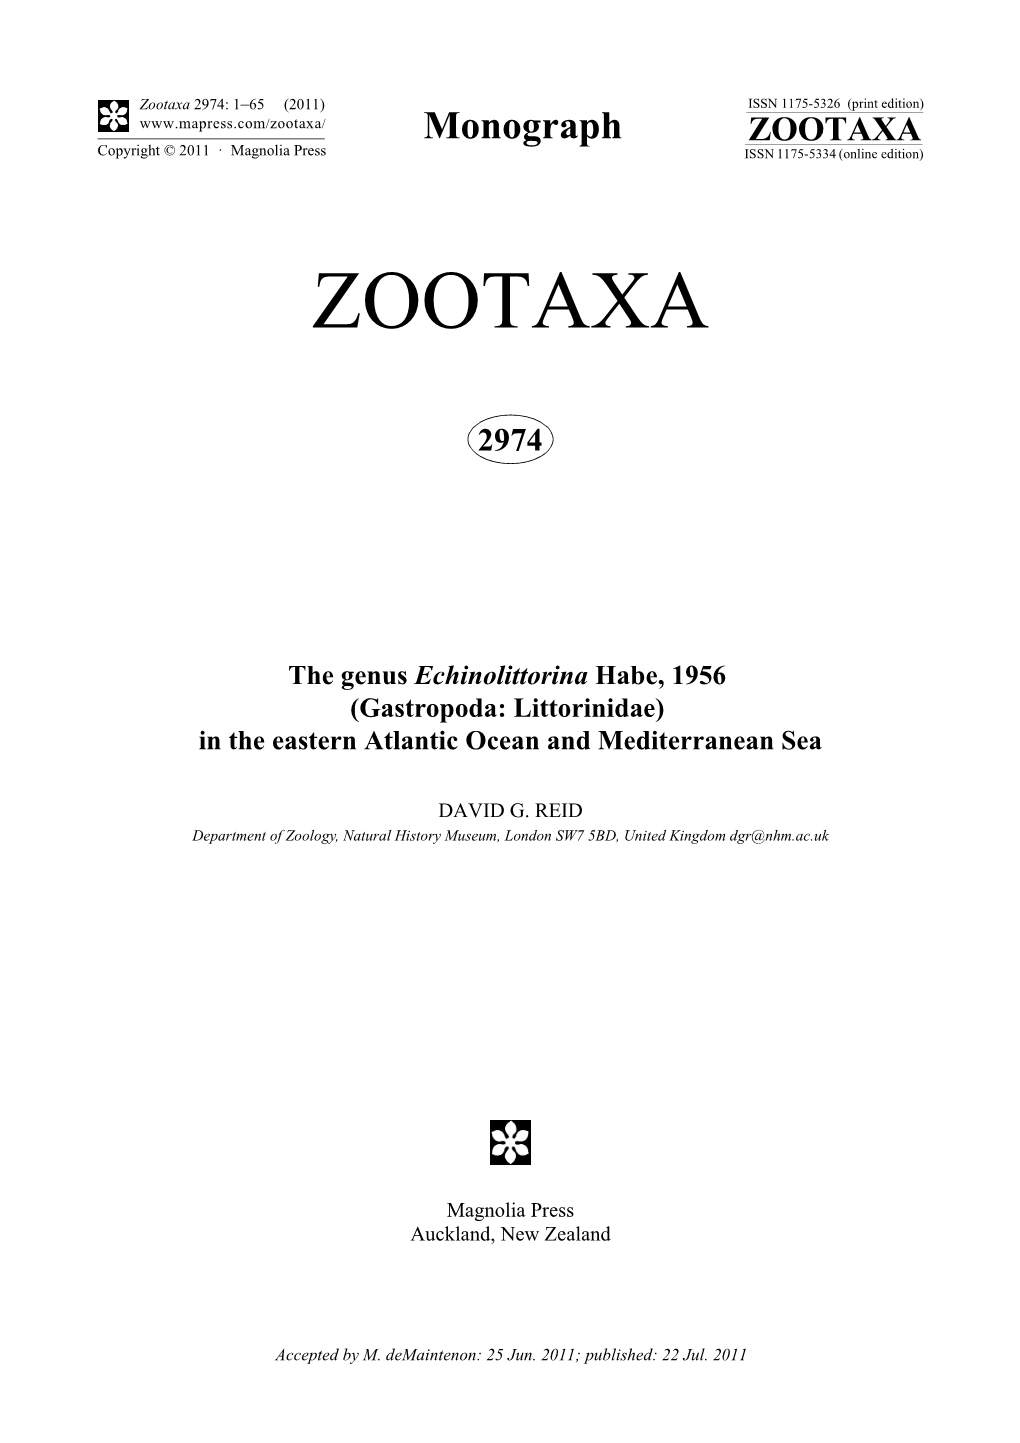 The Genus Echinolittorina Habe, 1956 (Gastropoda: Littorinidae) in the Eastern Atlantic Ocean and Mediterranean Sea